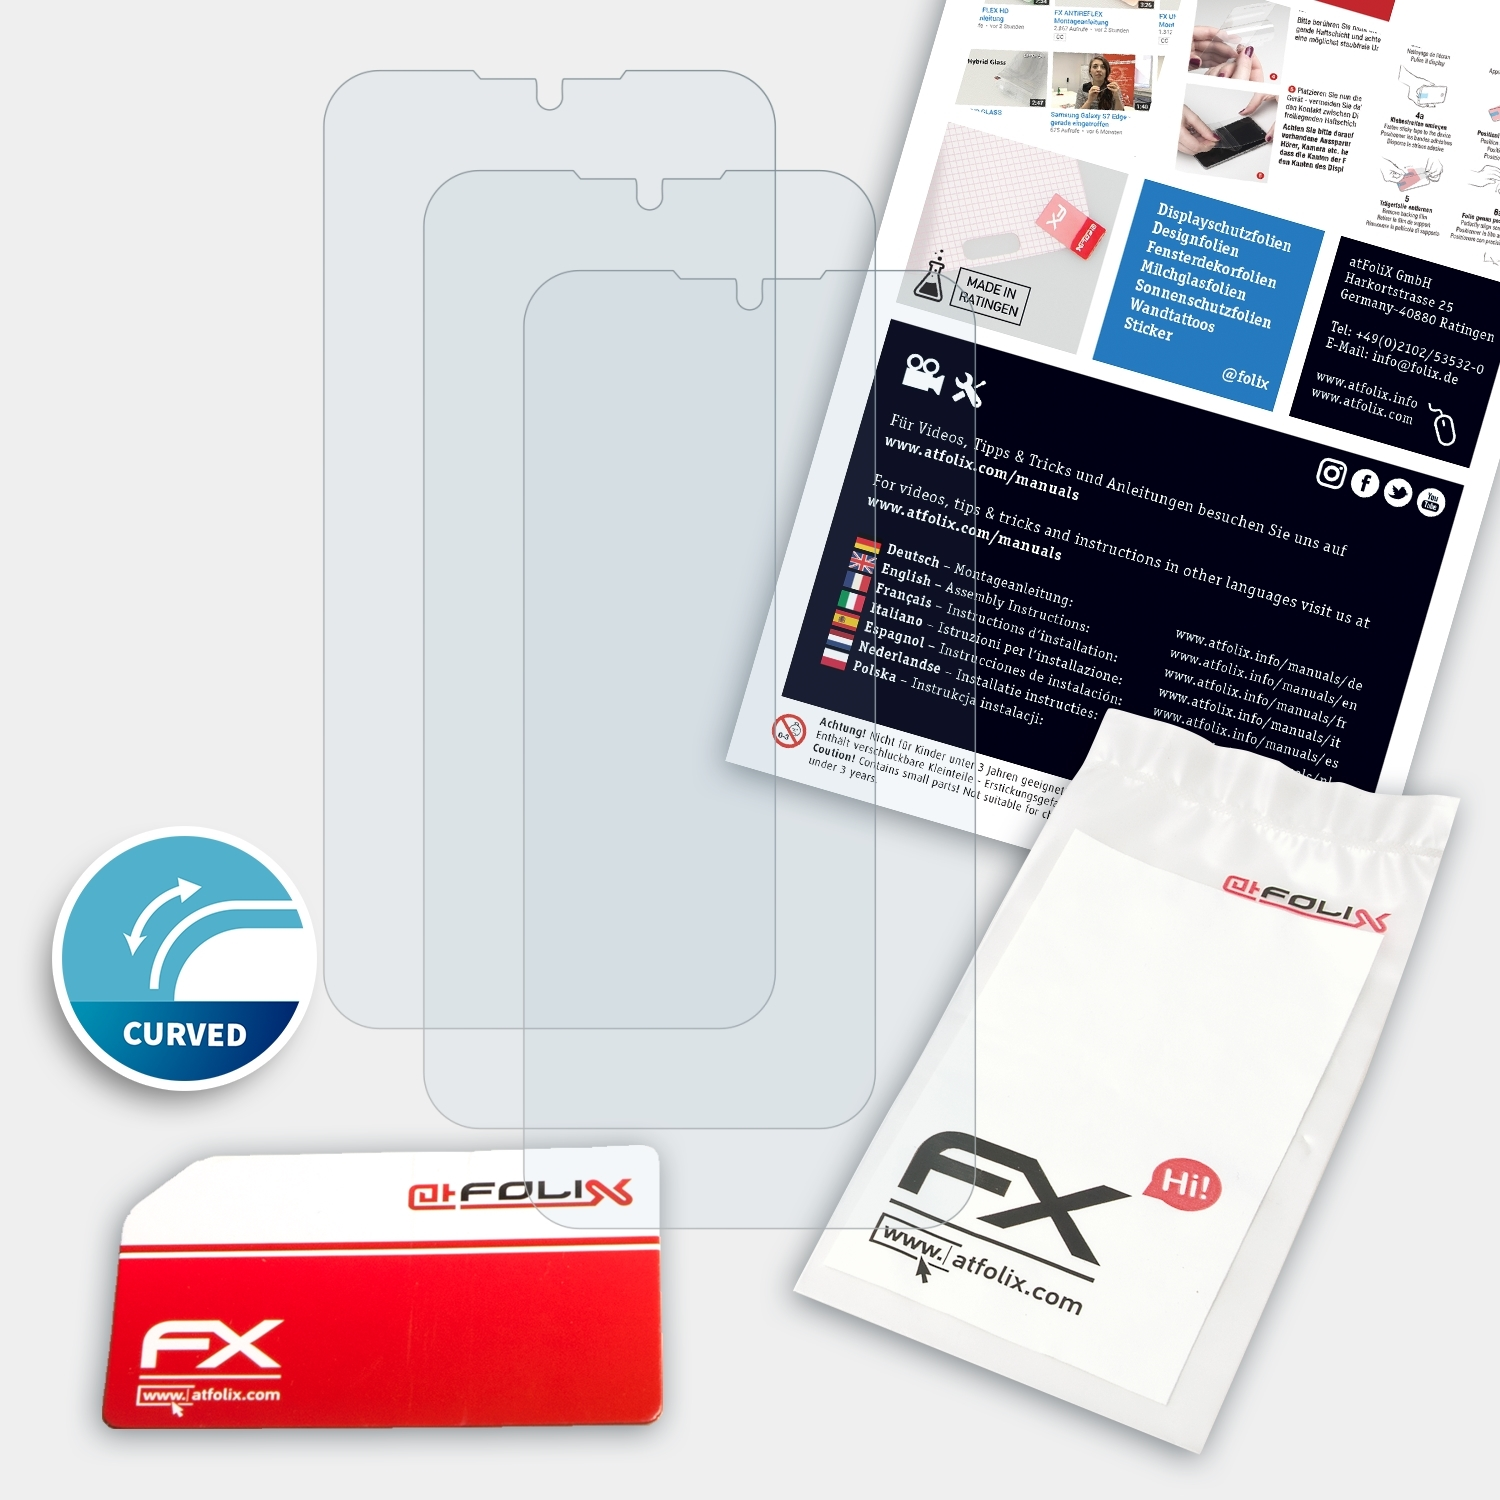 ATFOLIX Lenovo FX-ActiFleX K10 Plus) Displayschutz(für 3x